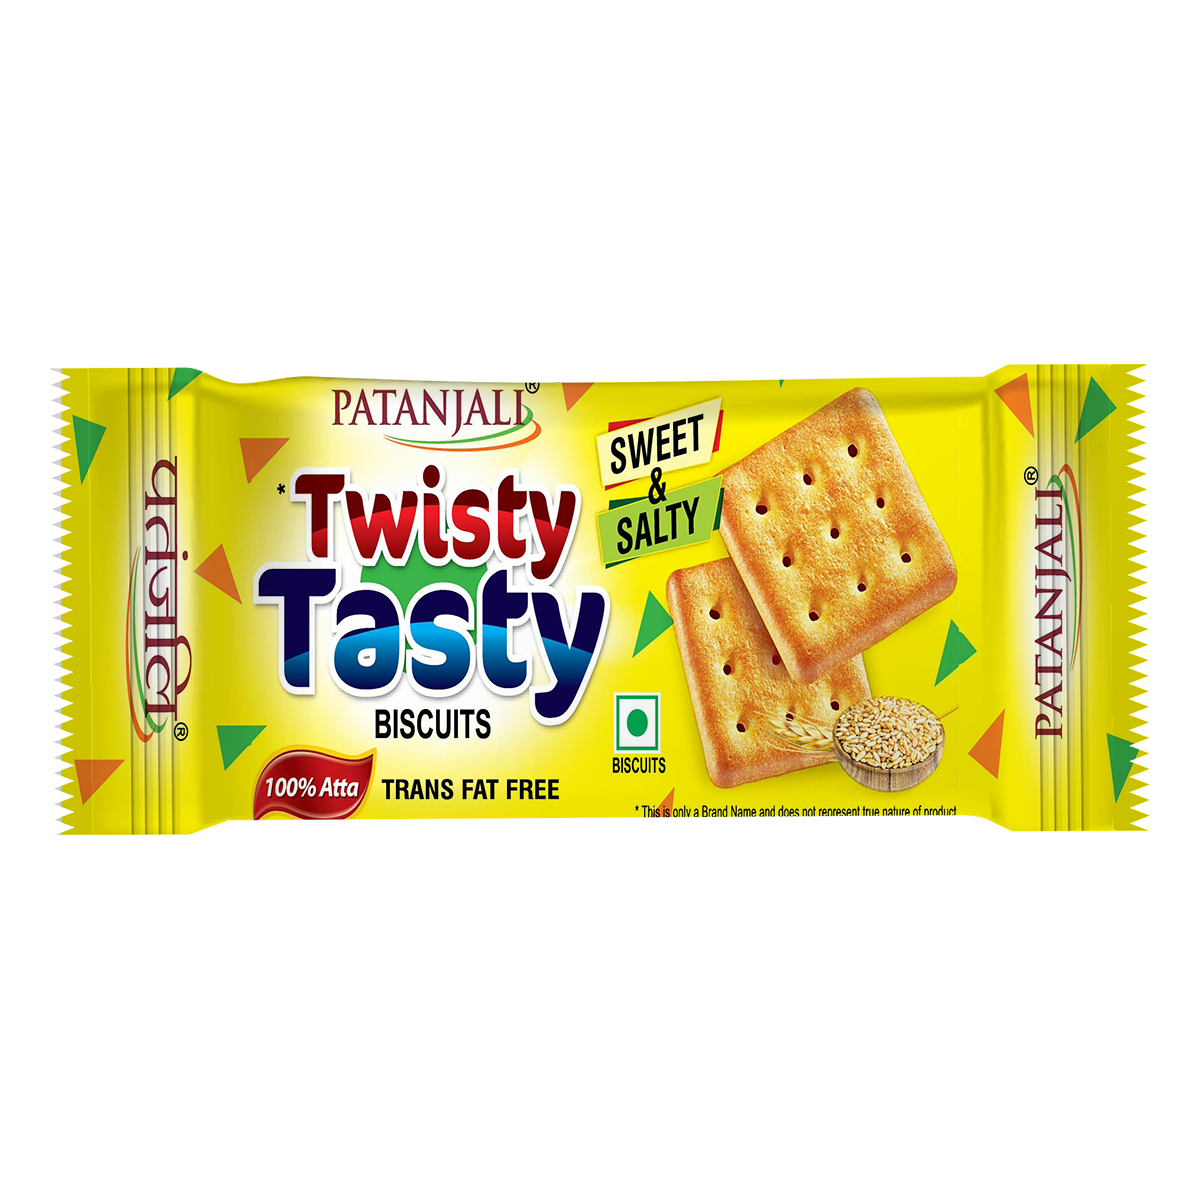 Patanjali Twisty Tasty Biscuits